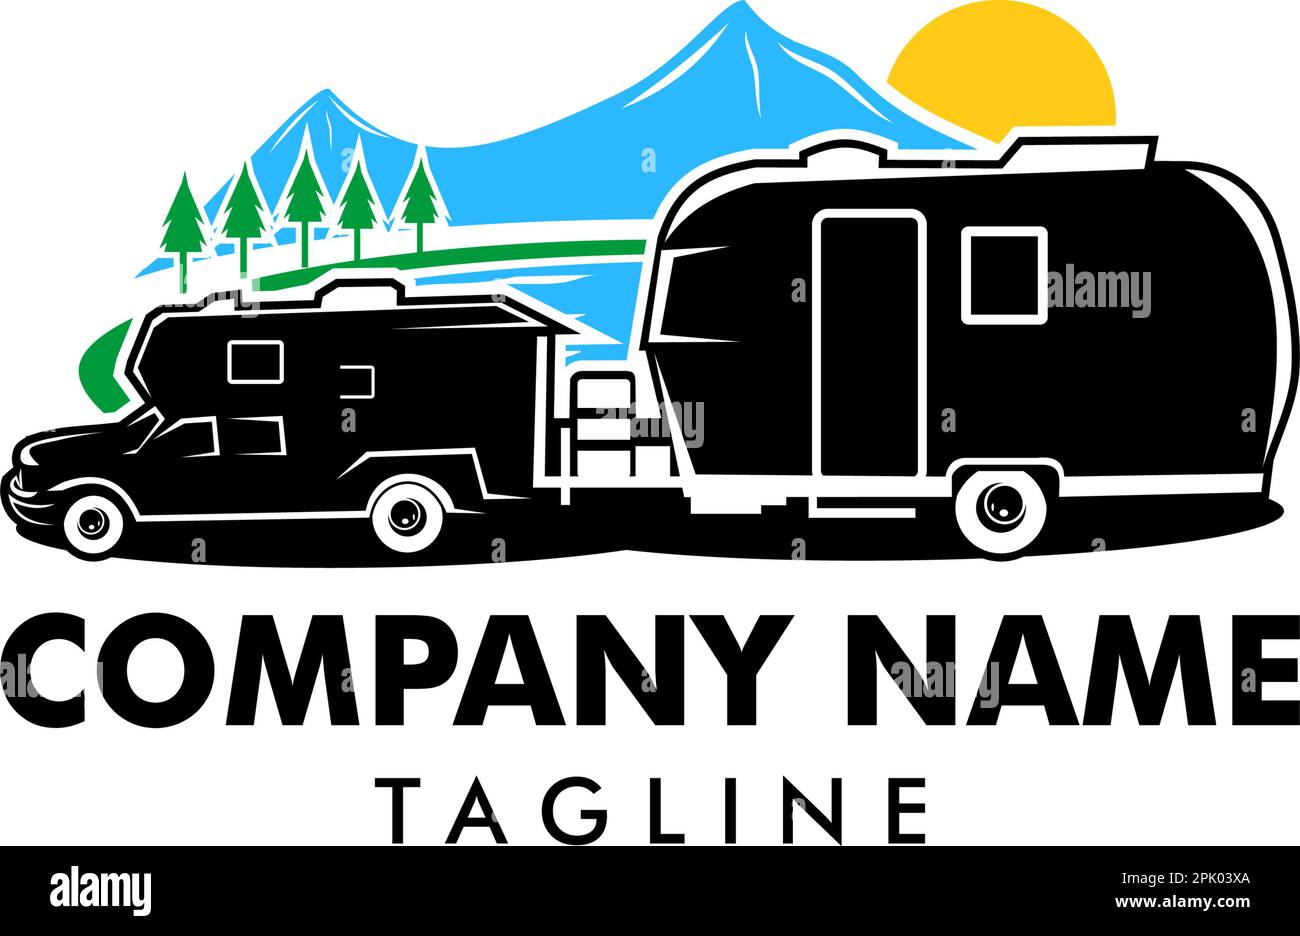 Adventure RV Camper Car Logo Designs Template Stock Vector Image & Art ...